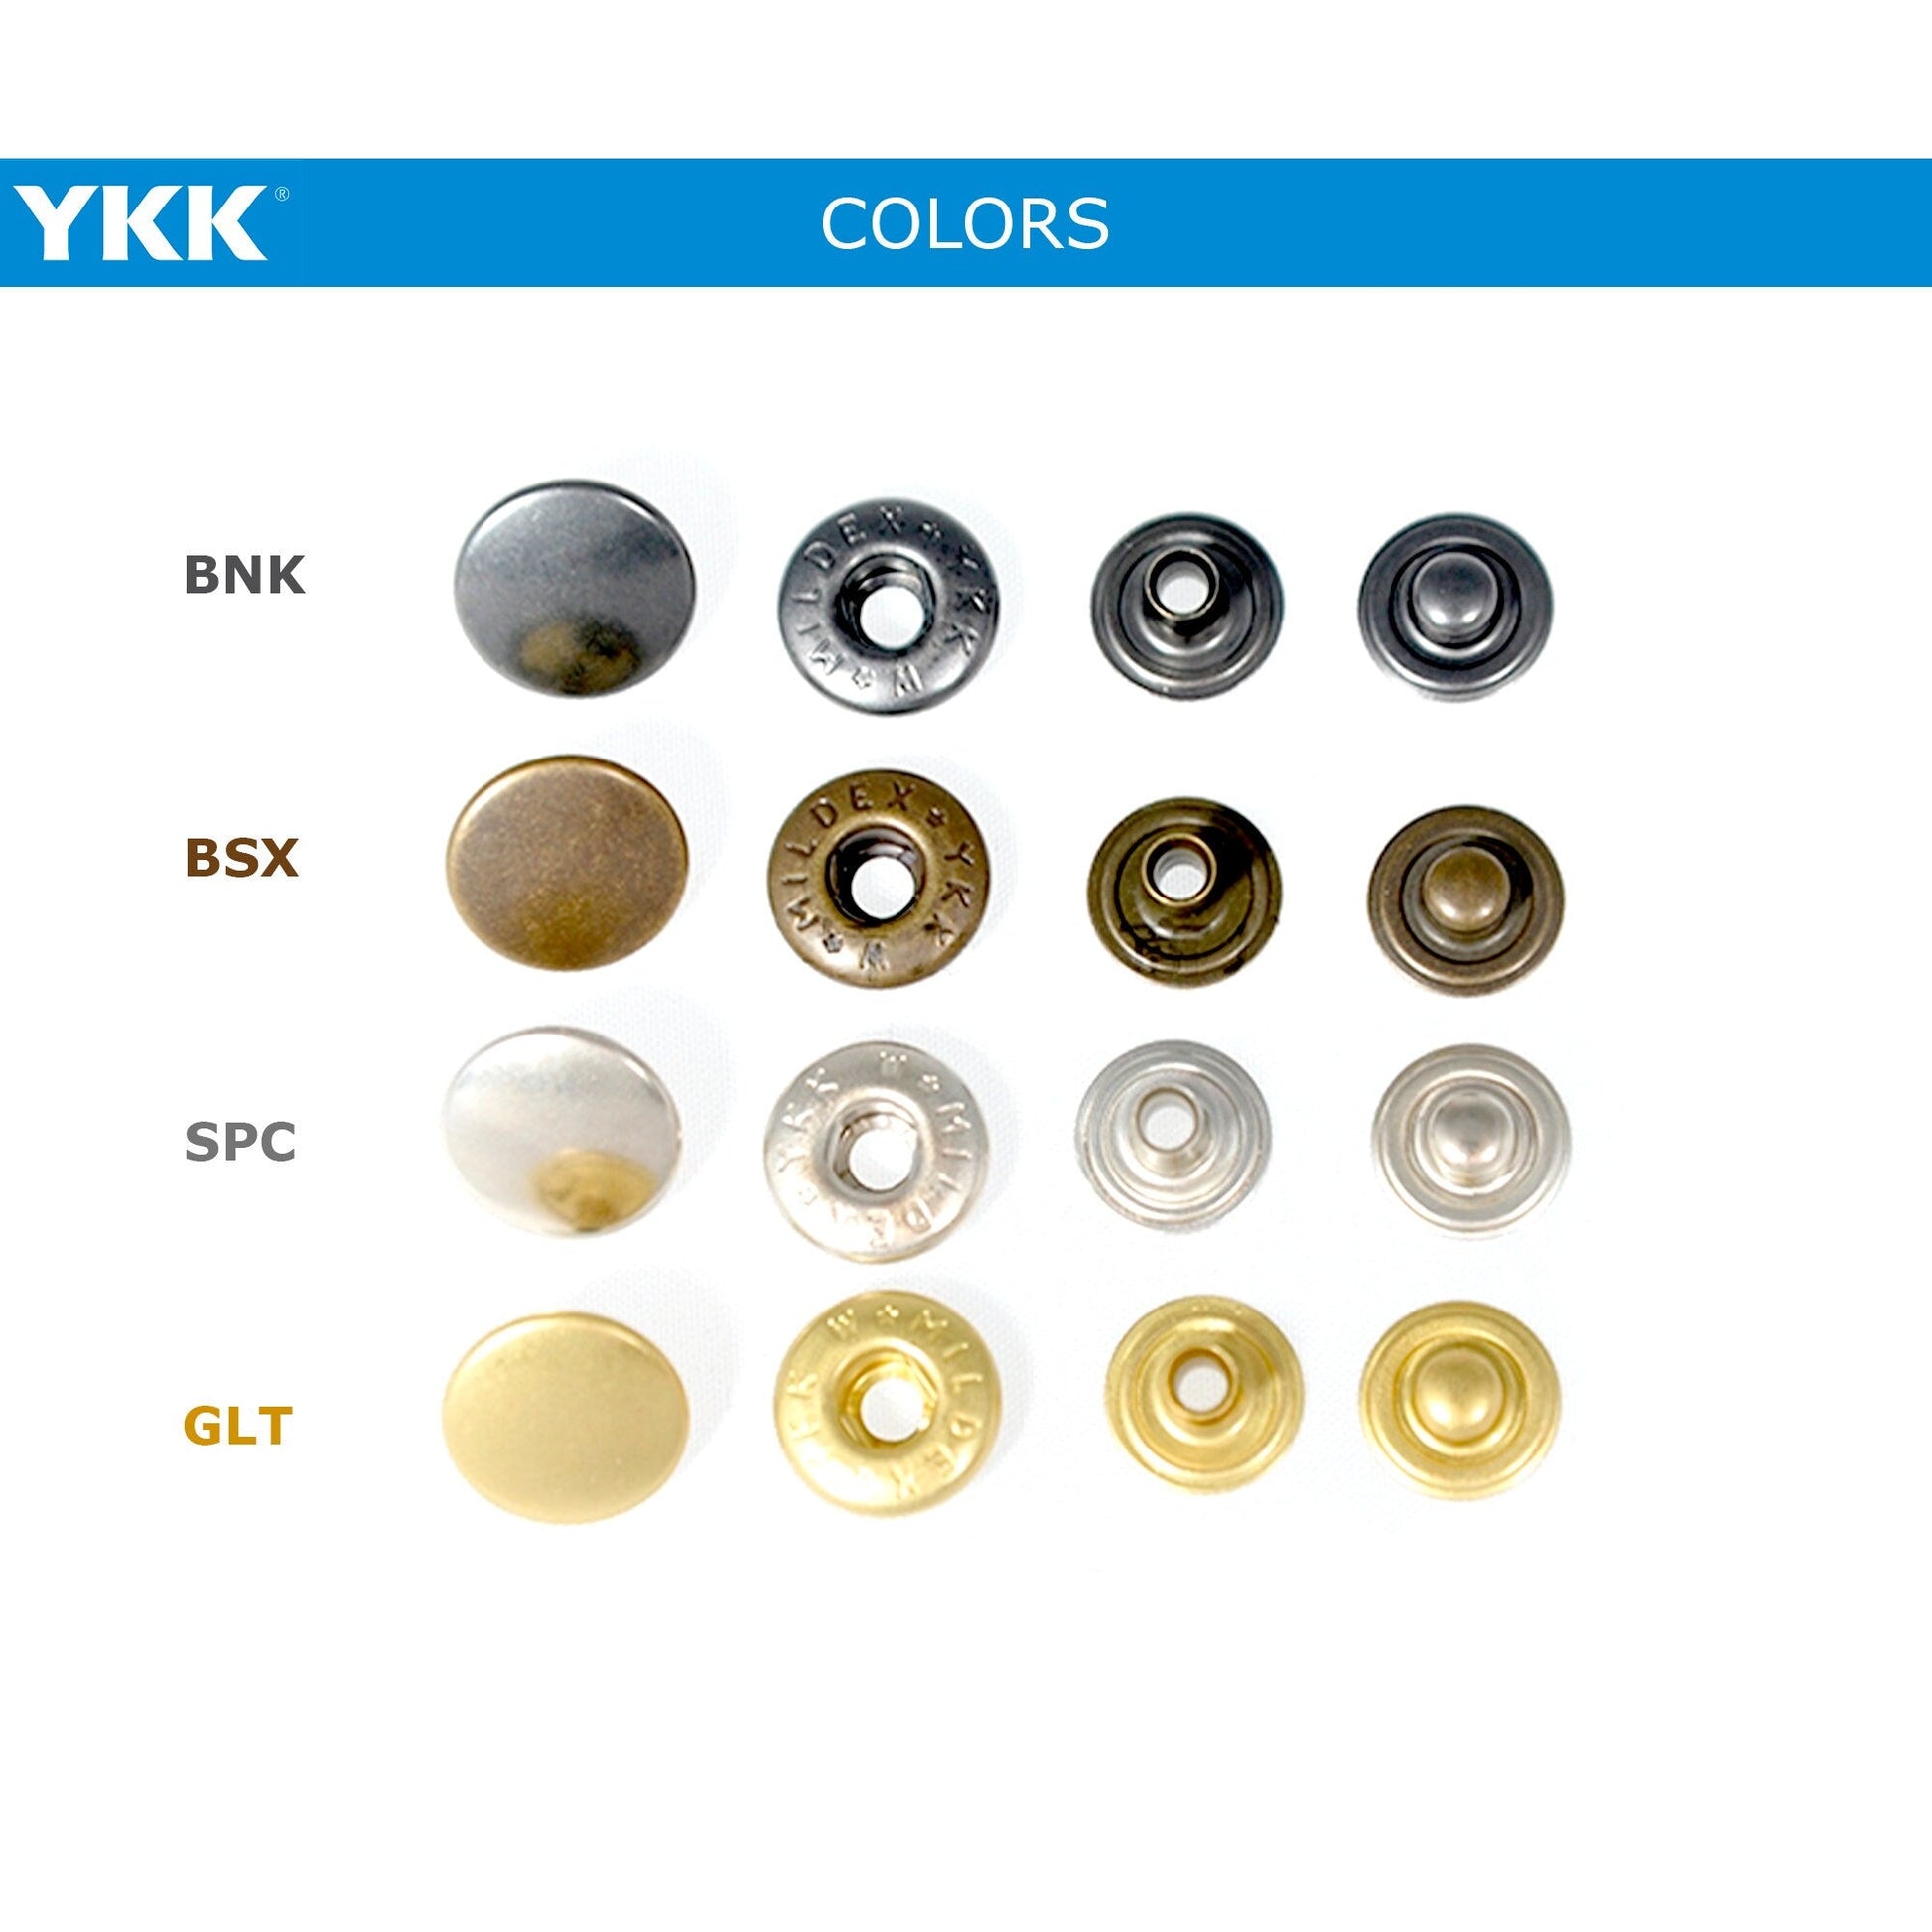 YKK SW35 Mildex Four Parts Alfa Button, Snap Button, Brass Button, Snaps, Metal Snap Snap ButtonsYKK